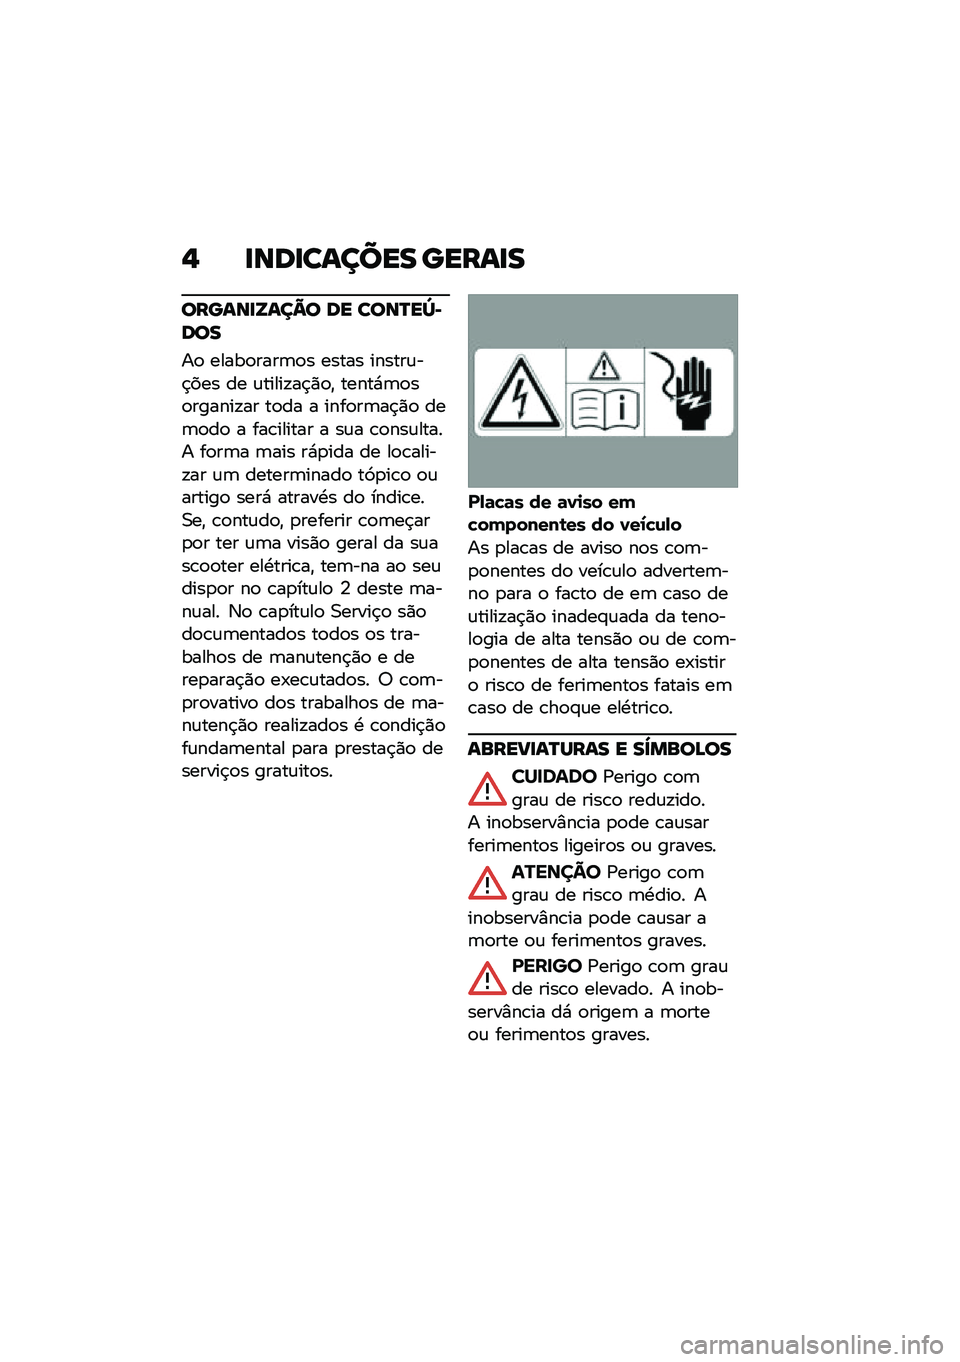 BMW MOTORRAD CE 04 2021  Manual do condutor (in Portuguese) �, �
���
������ �����
�
������
�W���A� �� ����O��e�*���
��
 �����
����	�
� ����� ������\f��$��� �� �\f�����!��$�)�
�" �����*�	�
��
��